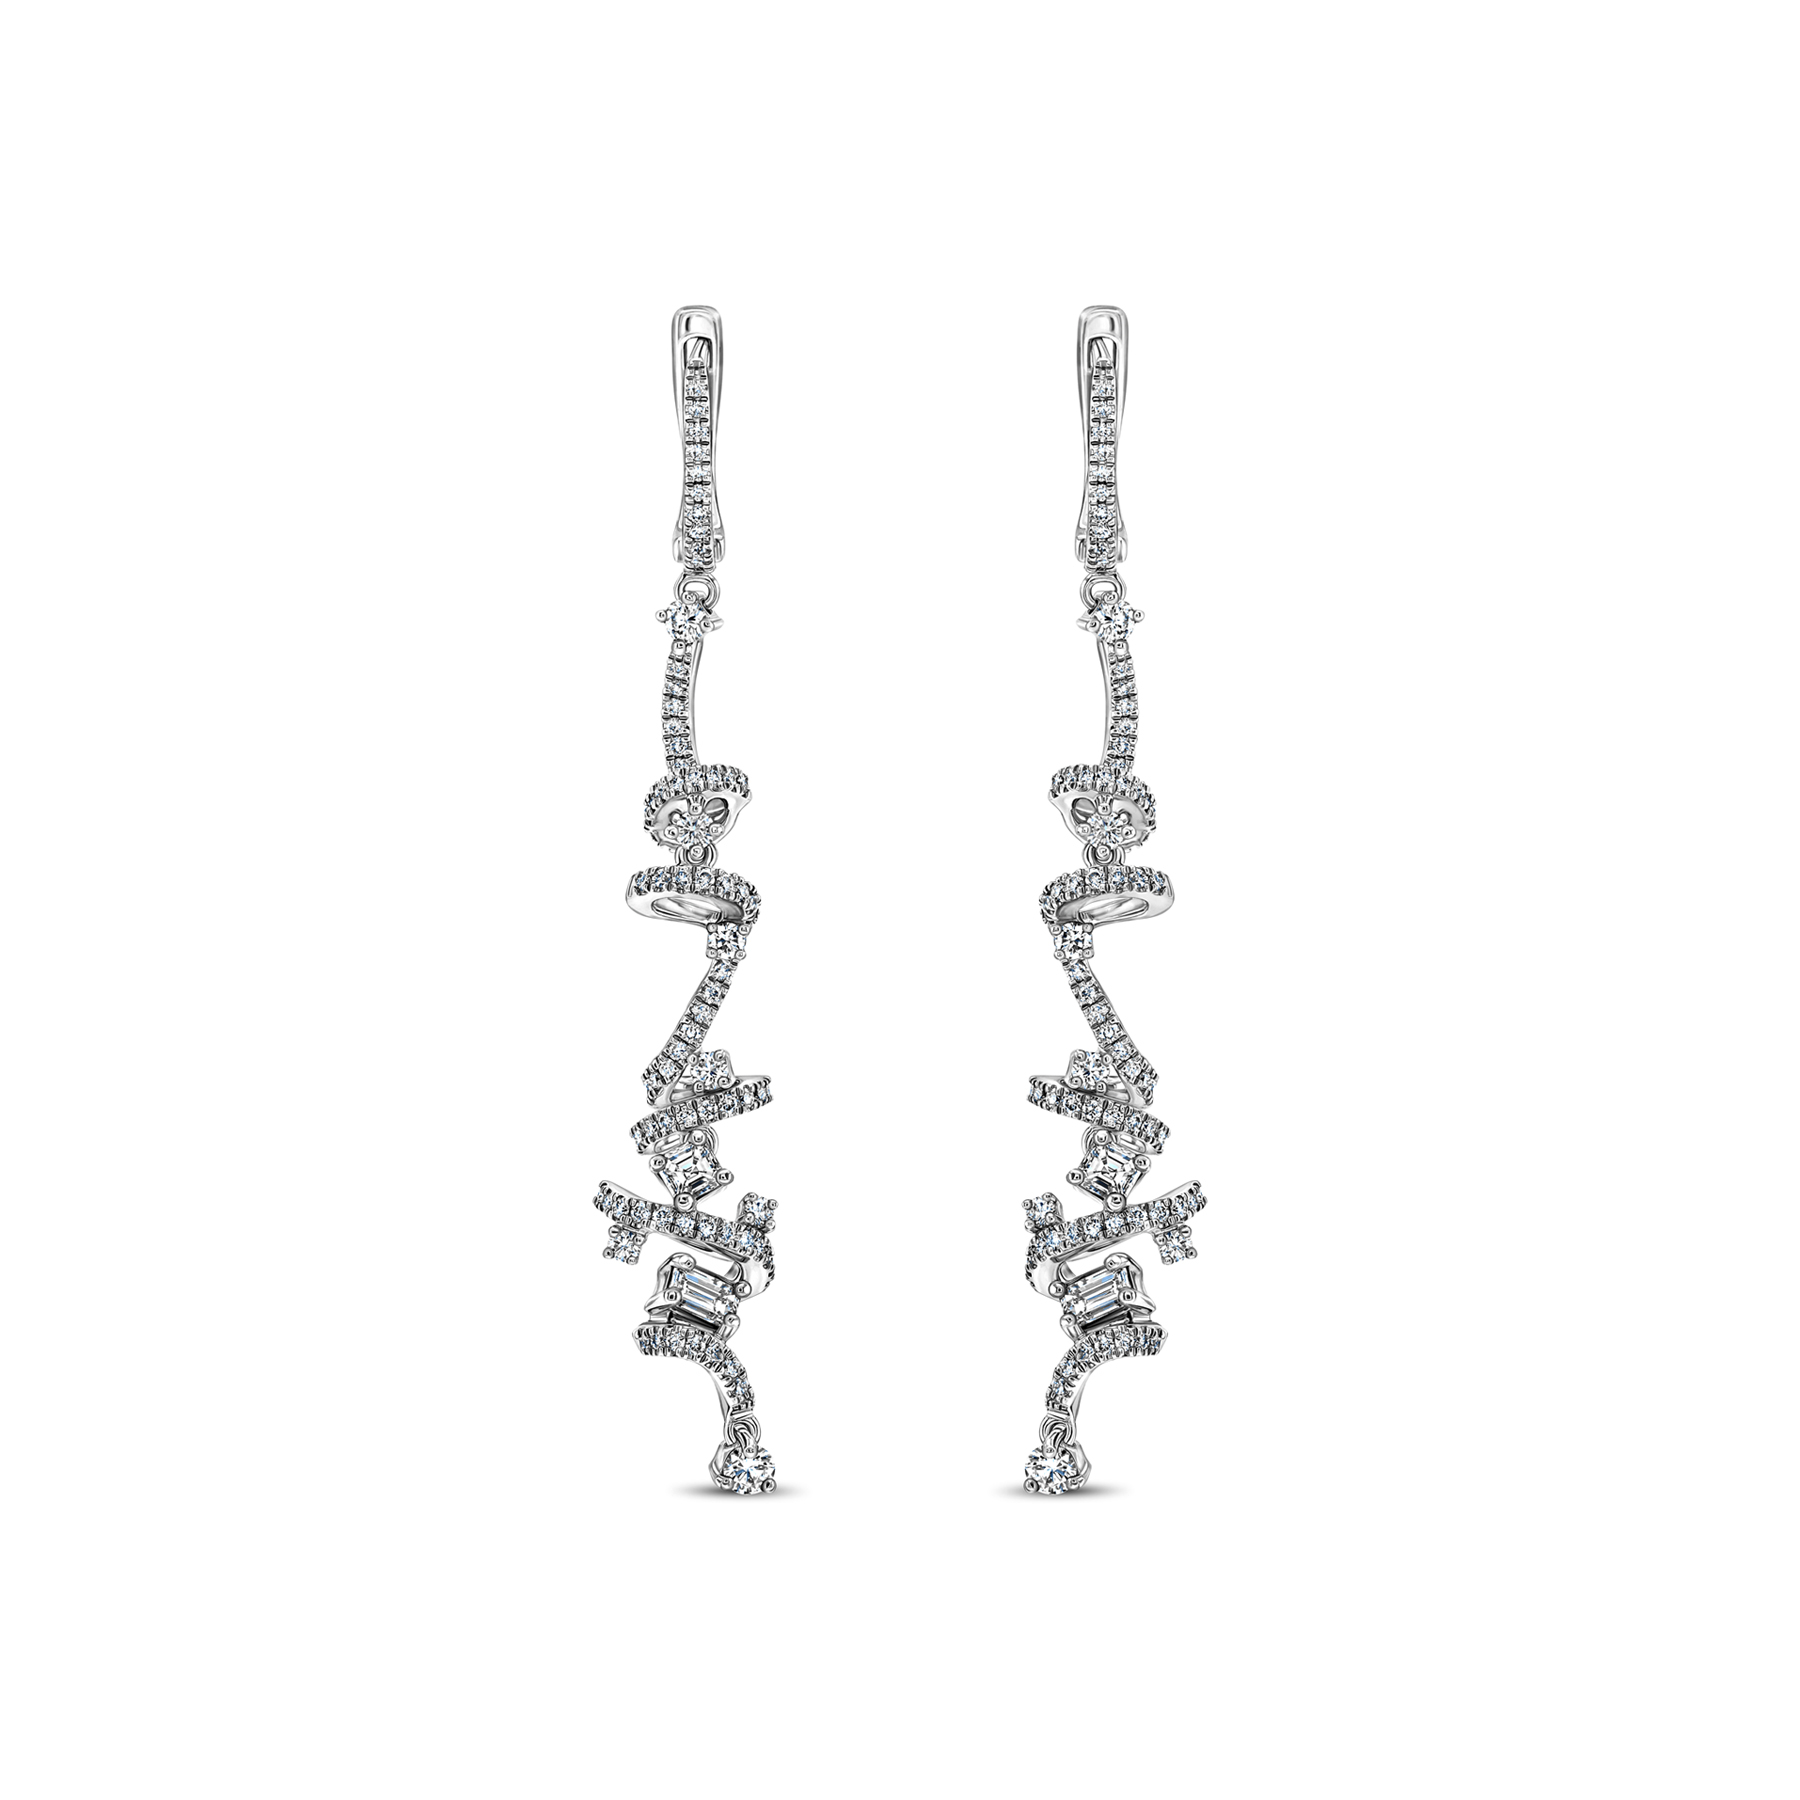 Contemporary designed diamond drop earrings